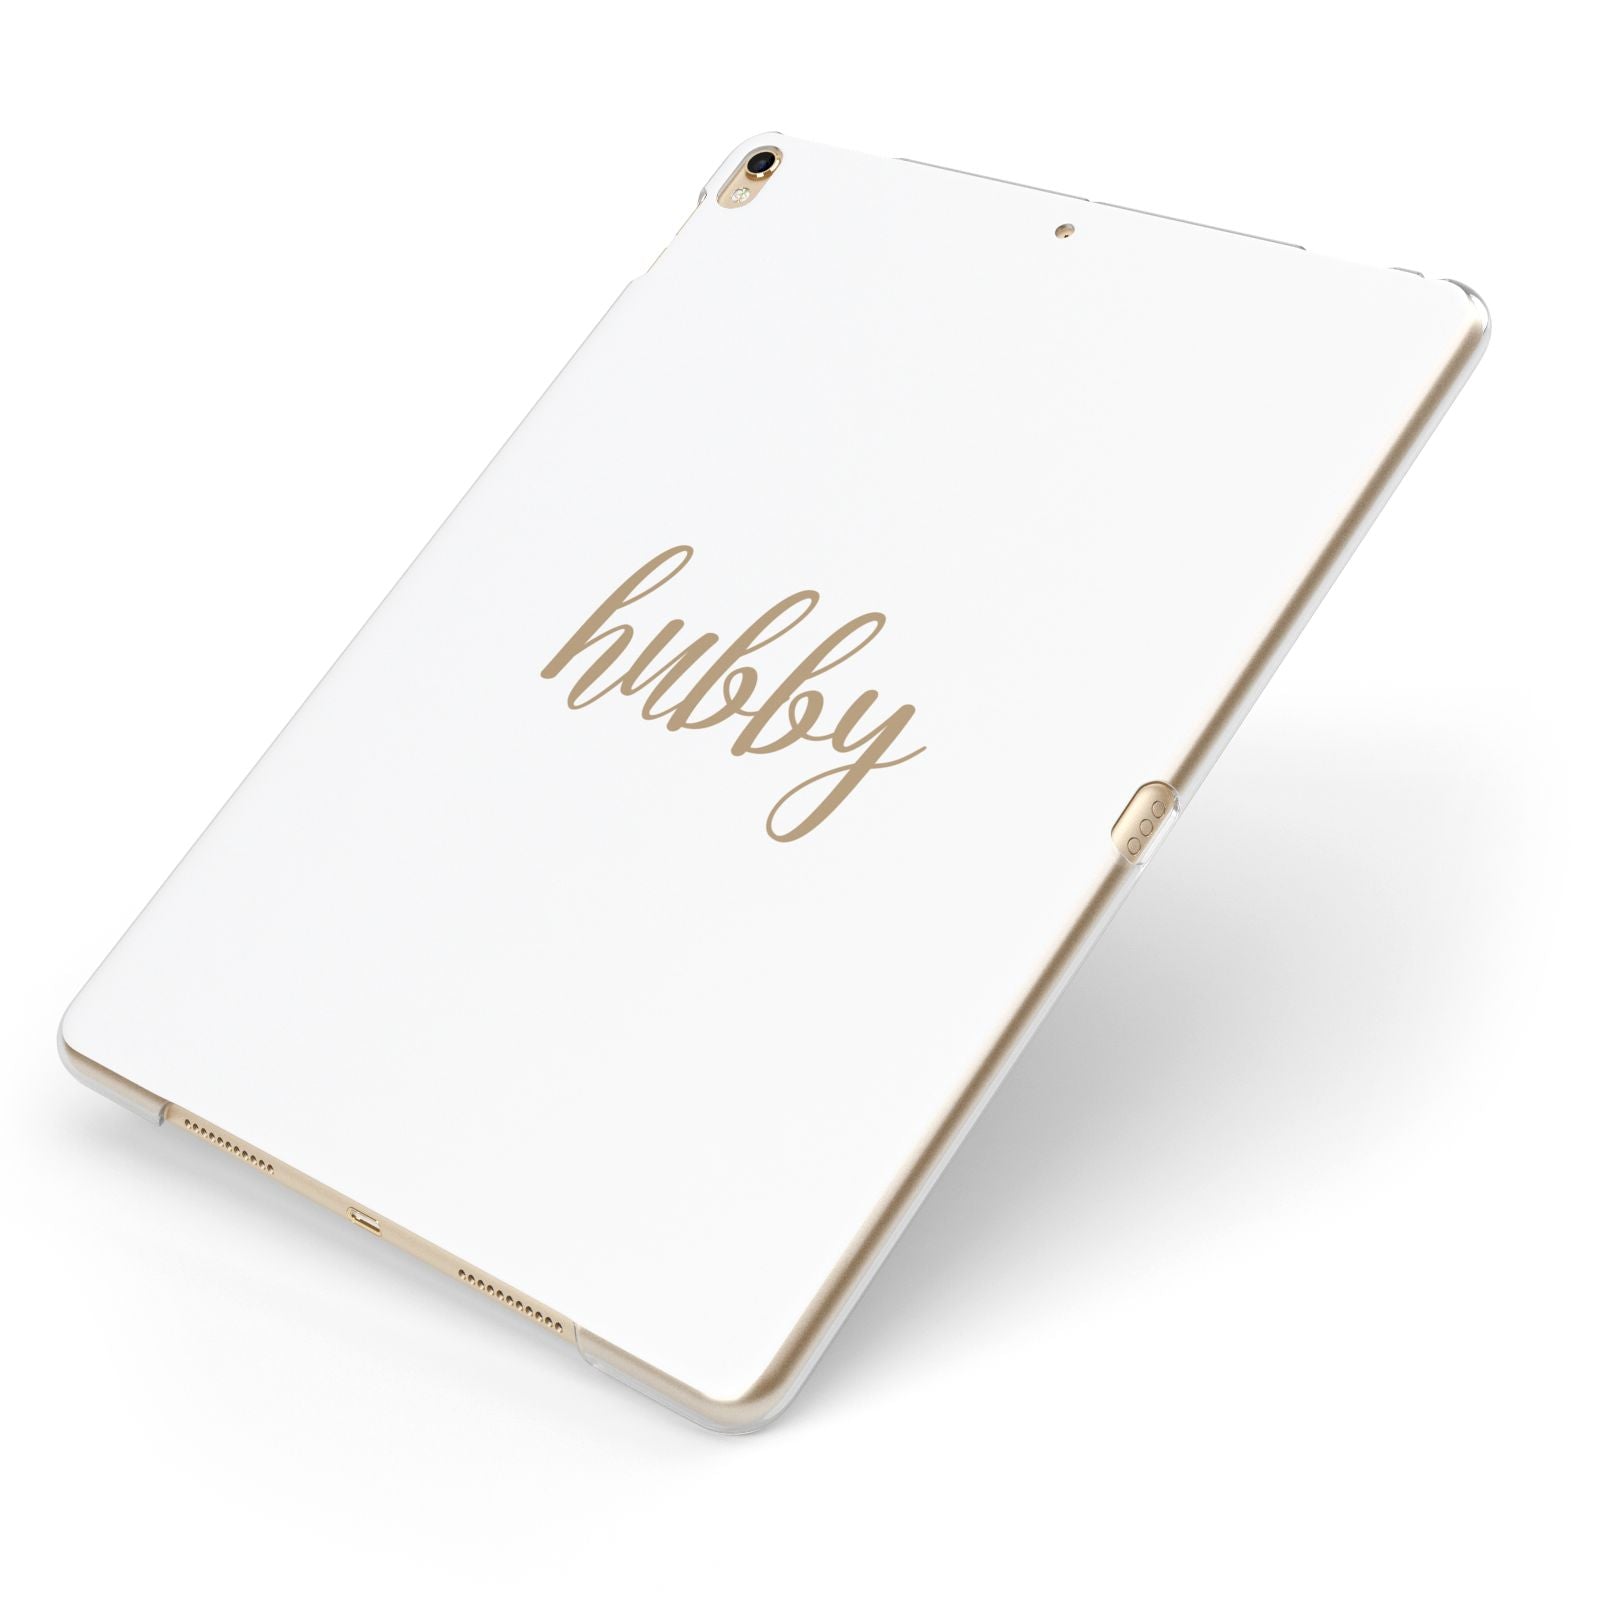 Hubby Apple iPad Case on Gold iPad Side View